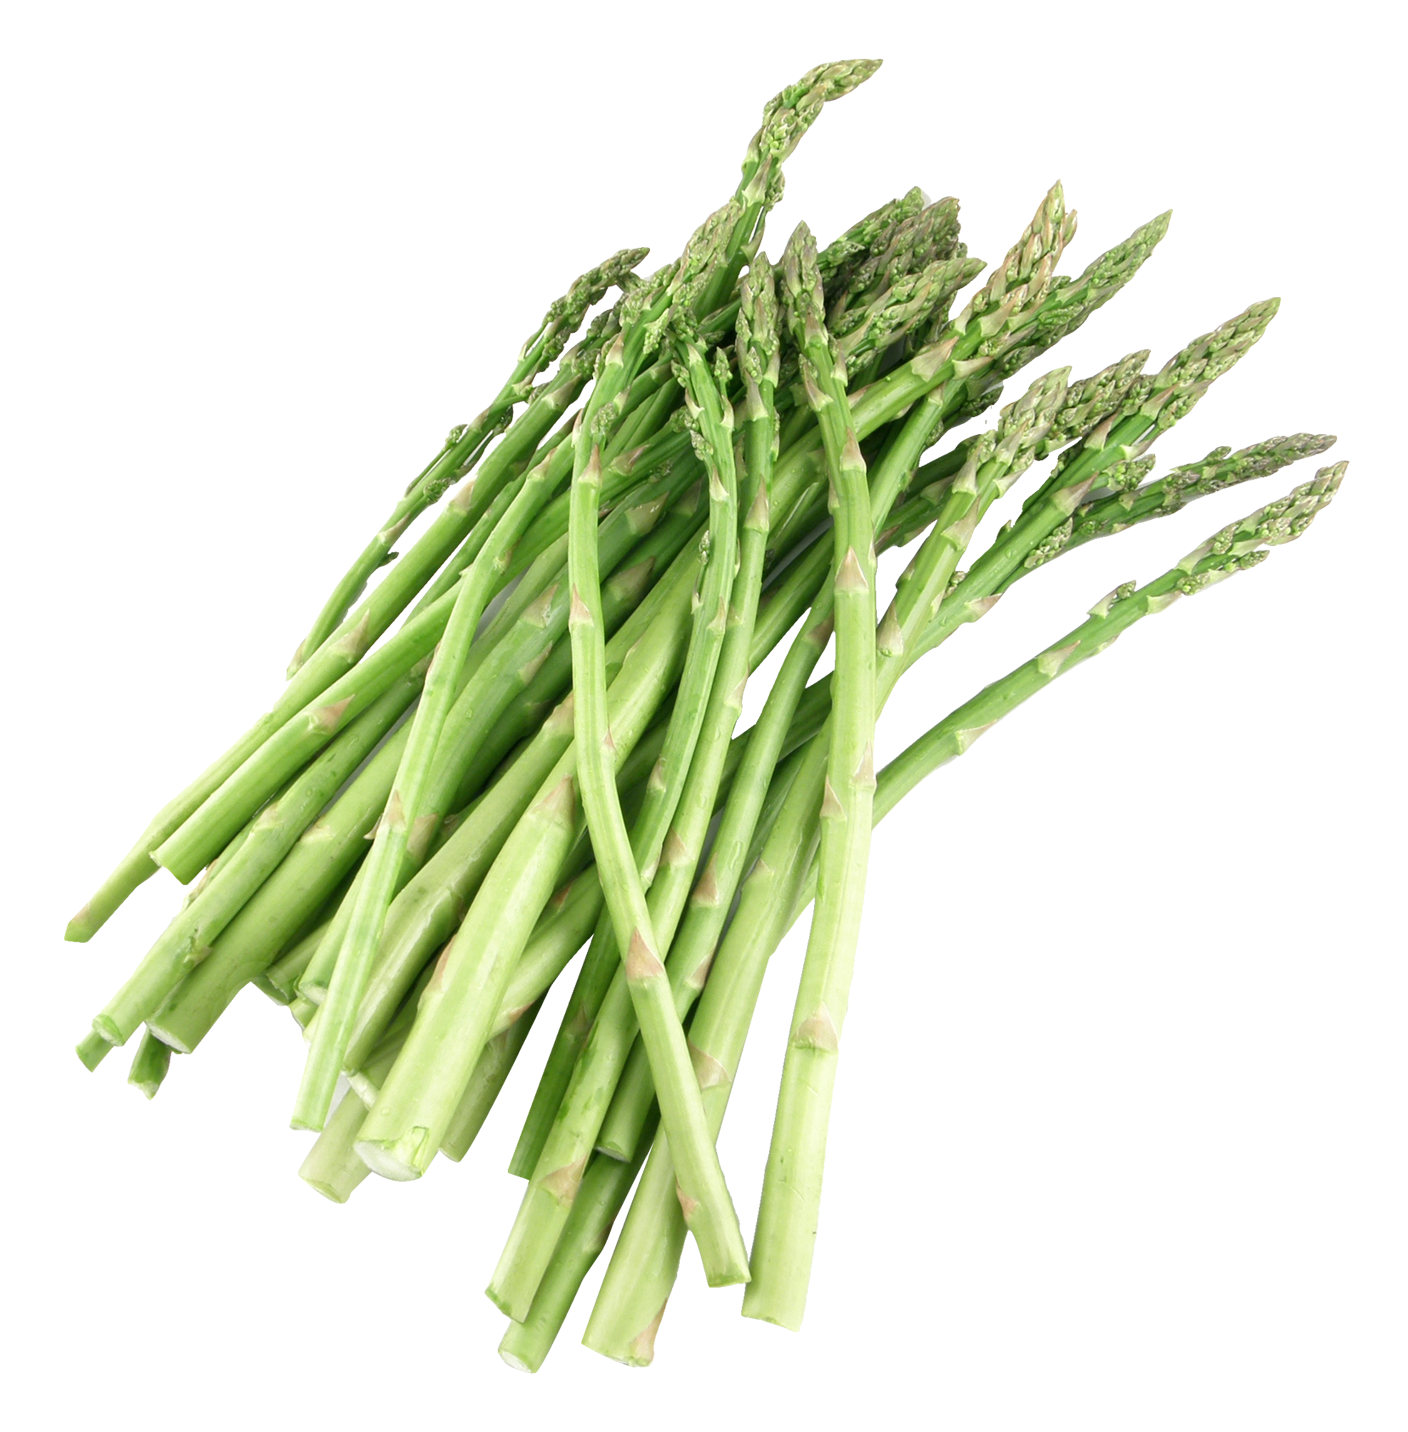 Clipart spring vegetable. Asparagus png image purepng